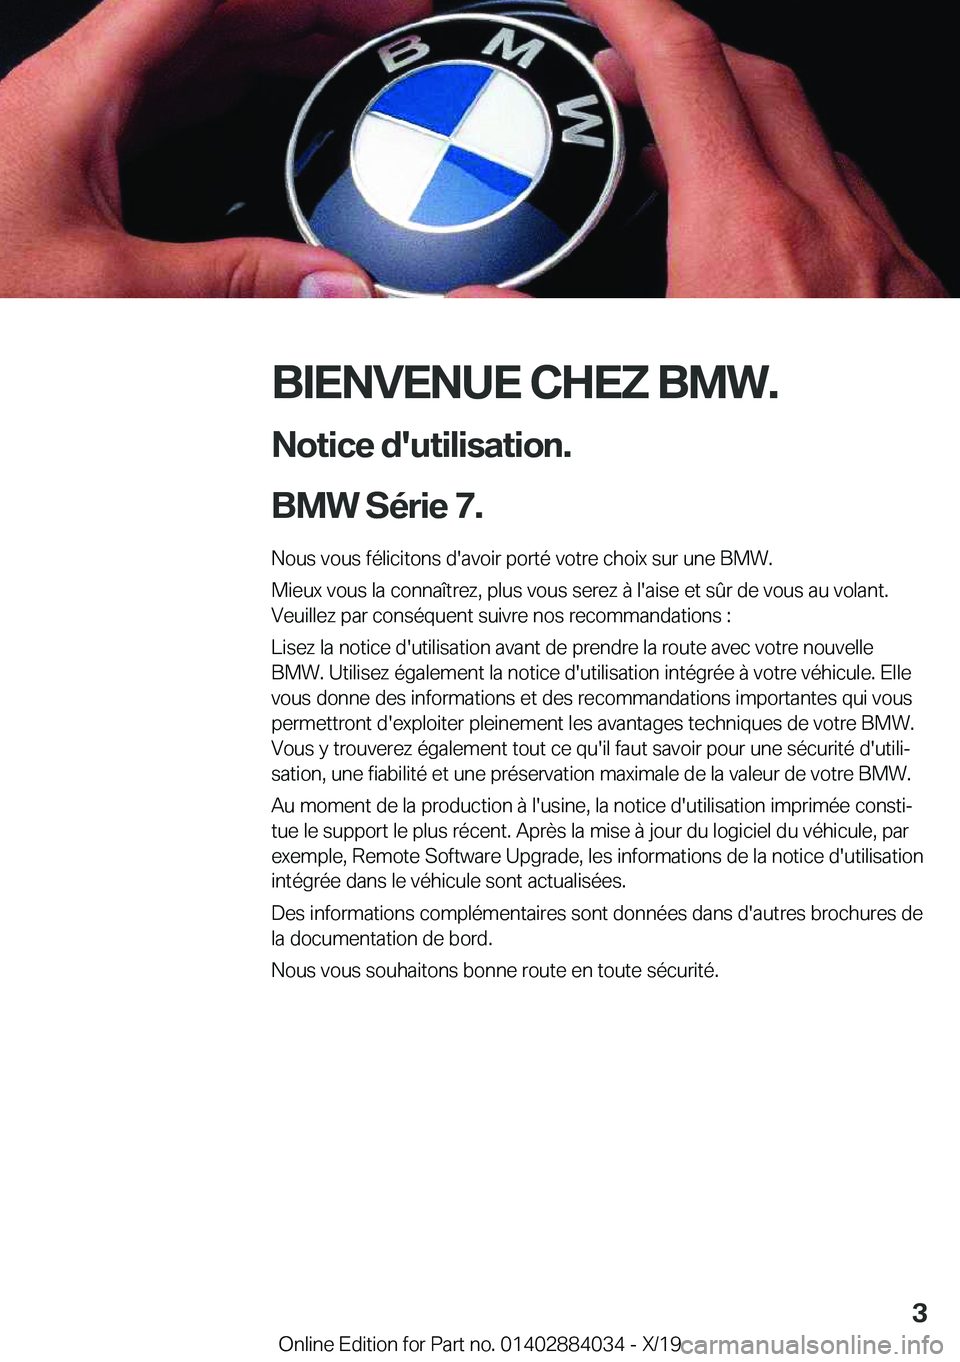 BMW 7 SERIES 2020  Notices Demploi (in French) �B�I�E�N�V�E�N�U�E��C�H�E�Z��B�M�W�.�N�o�t�i�c�e��d�'�u�t�i�l�i�s�a�t�i�o�n�.
�B�M�W��S�é�r�i�e��7�.
�N�o�u�s��v�o�u�s��f�é�l�i�c�i�t�o�n�s��d�'�a�v�o�i�r��p�o�r�t�é��v�o�t�r�e��